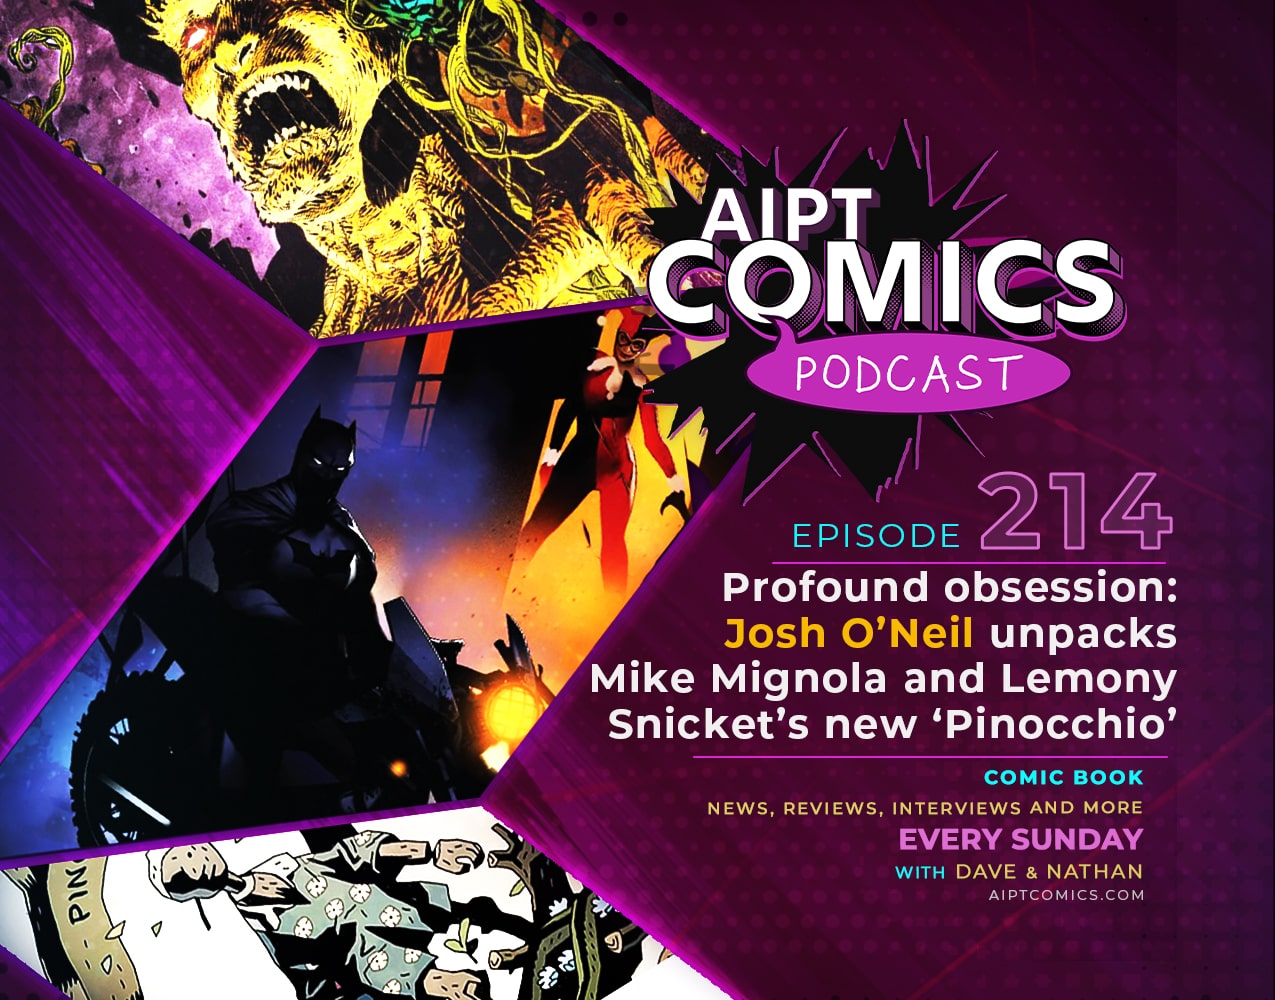 AIPT Comics Podcast episode 214: Profound obsession: Josh O’Neil unpacks Mike Mignola and Lemony Snicket’s new ‘Pinocchio’